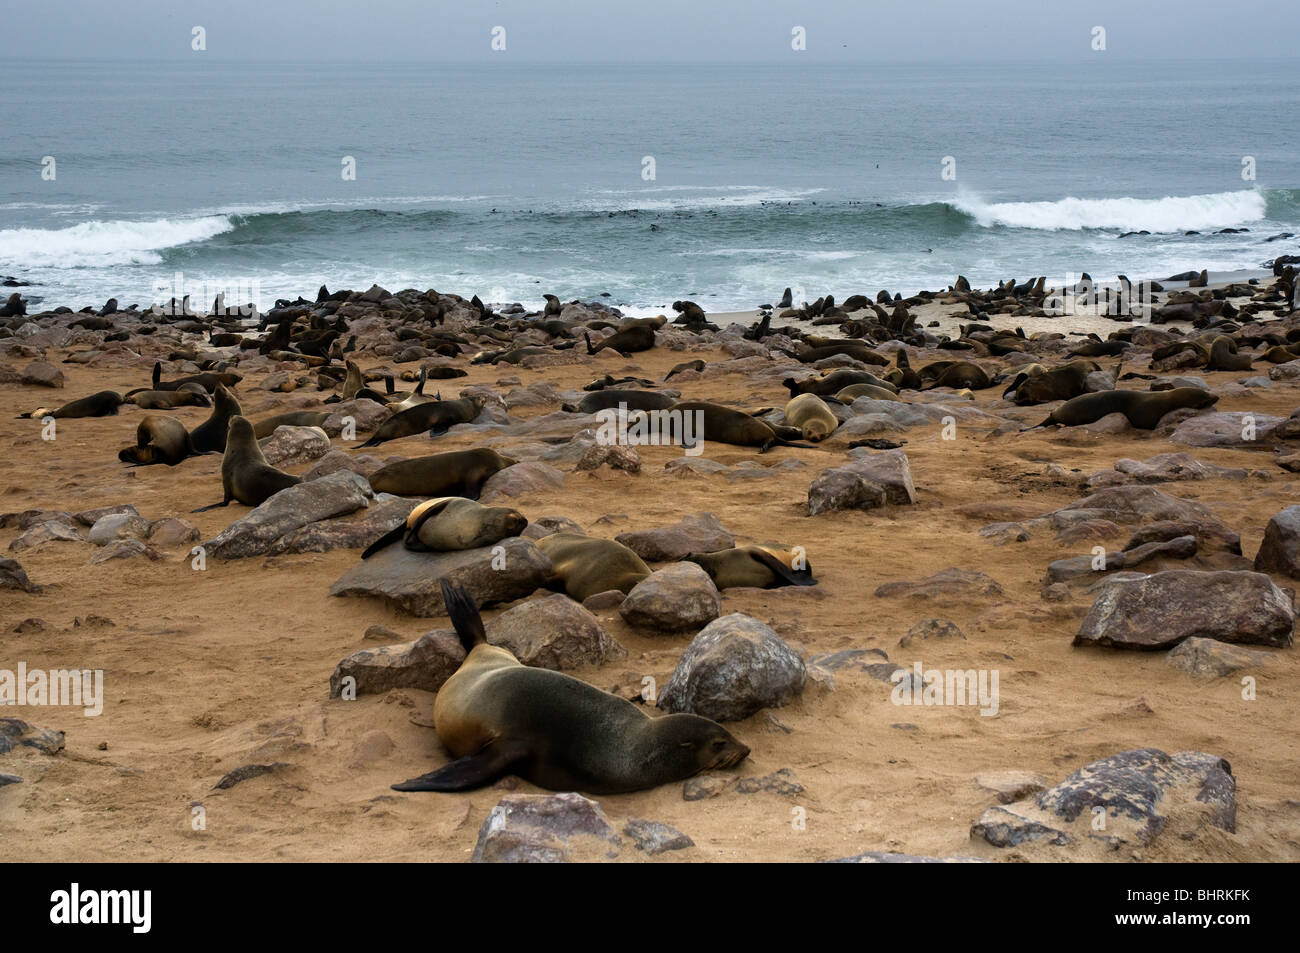 Cape Cross 'Cape Fur Seal' colony in Skeleton Coast Park, Namibia Stock Photo